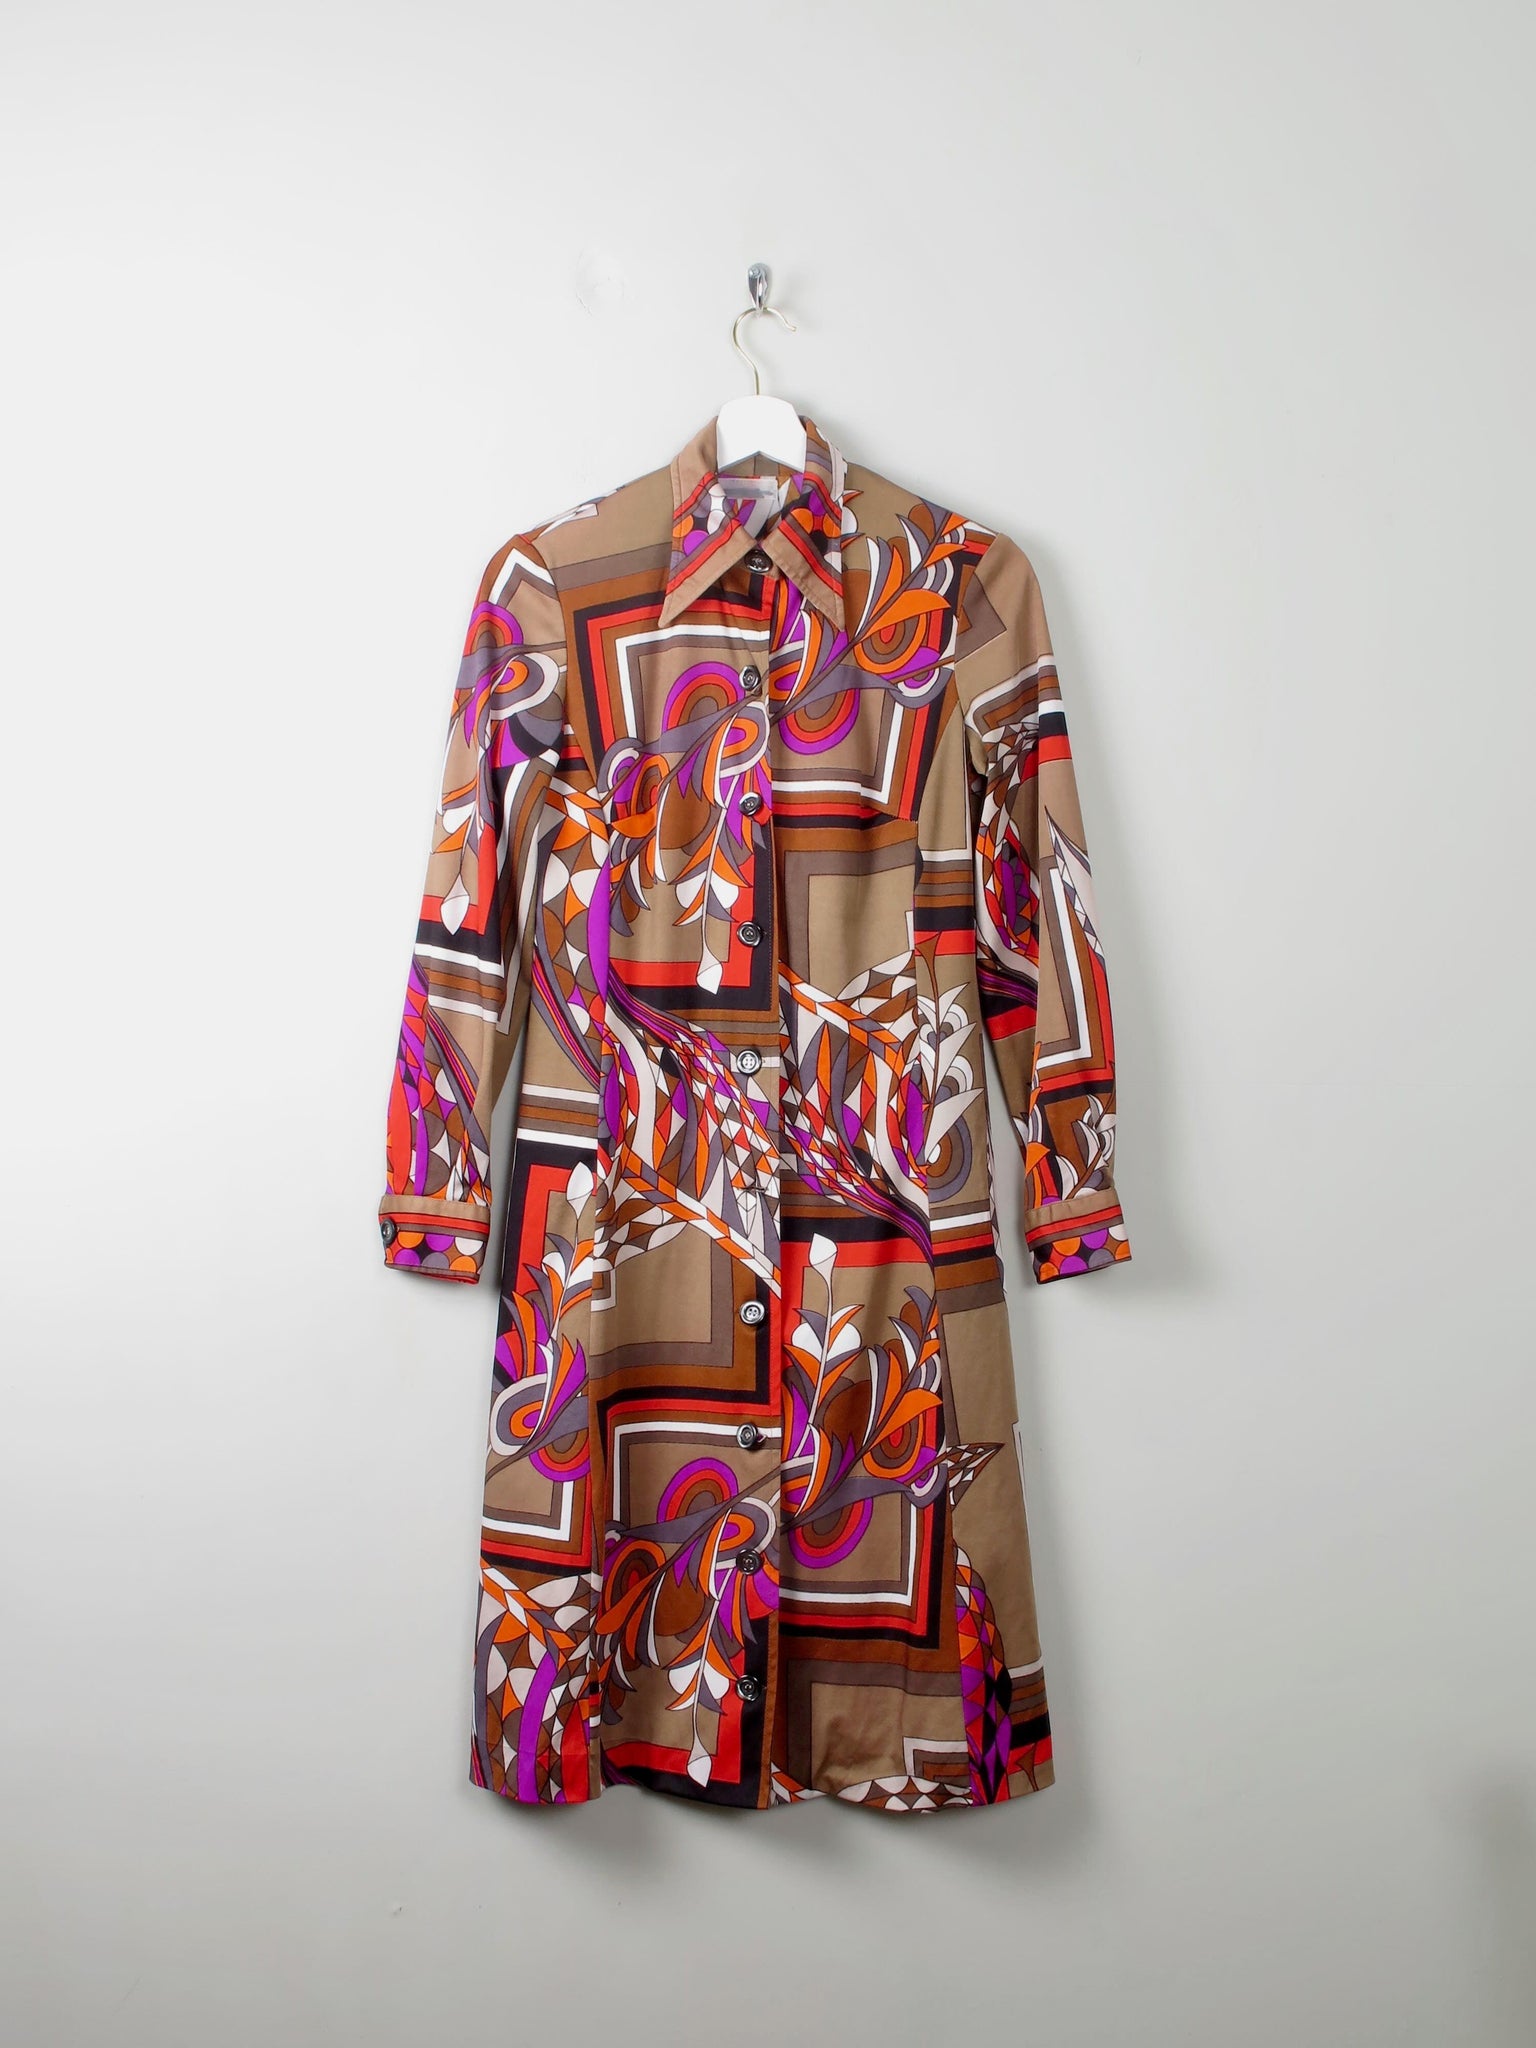 Vintage Printed 70s Shirt Dress S - The Harlequin